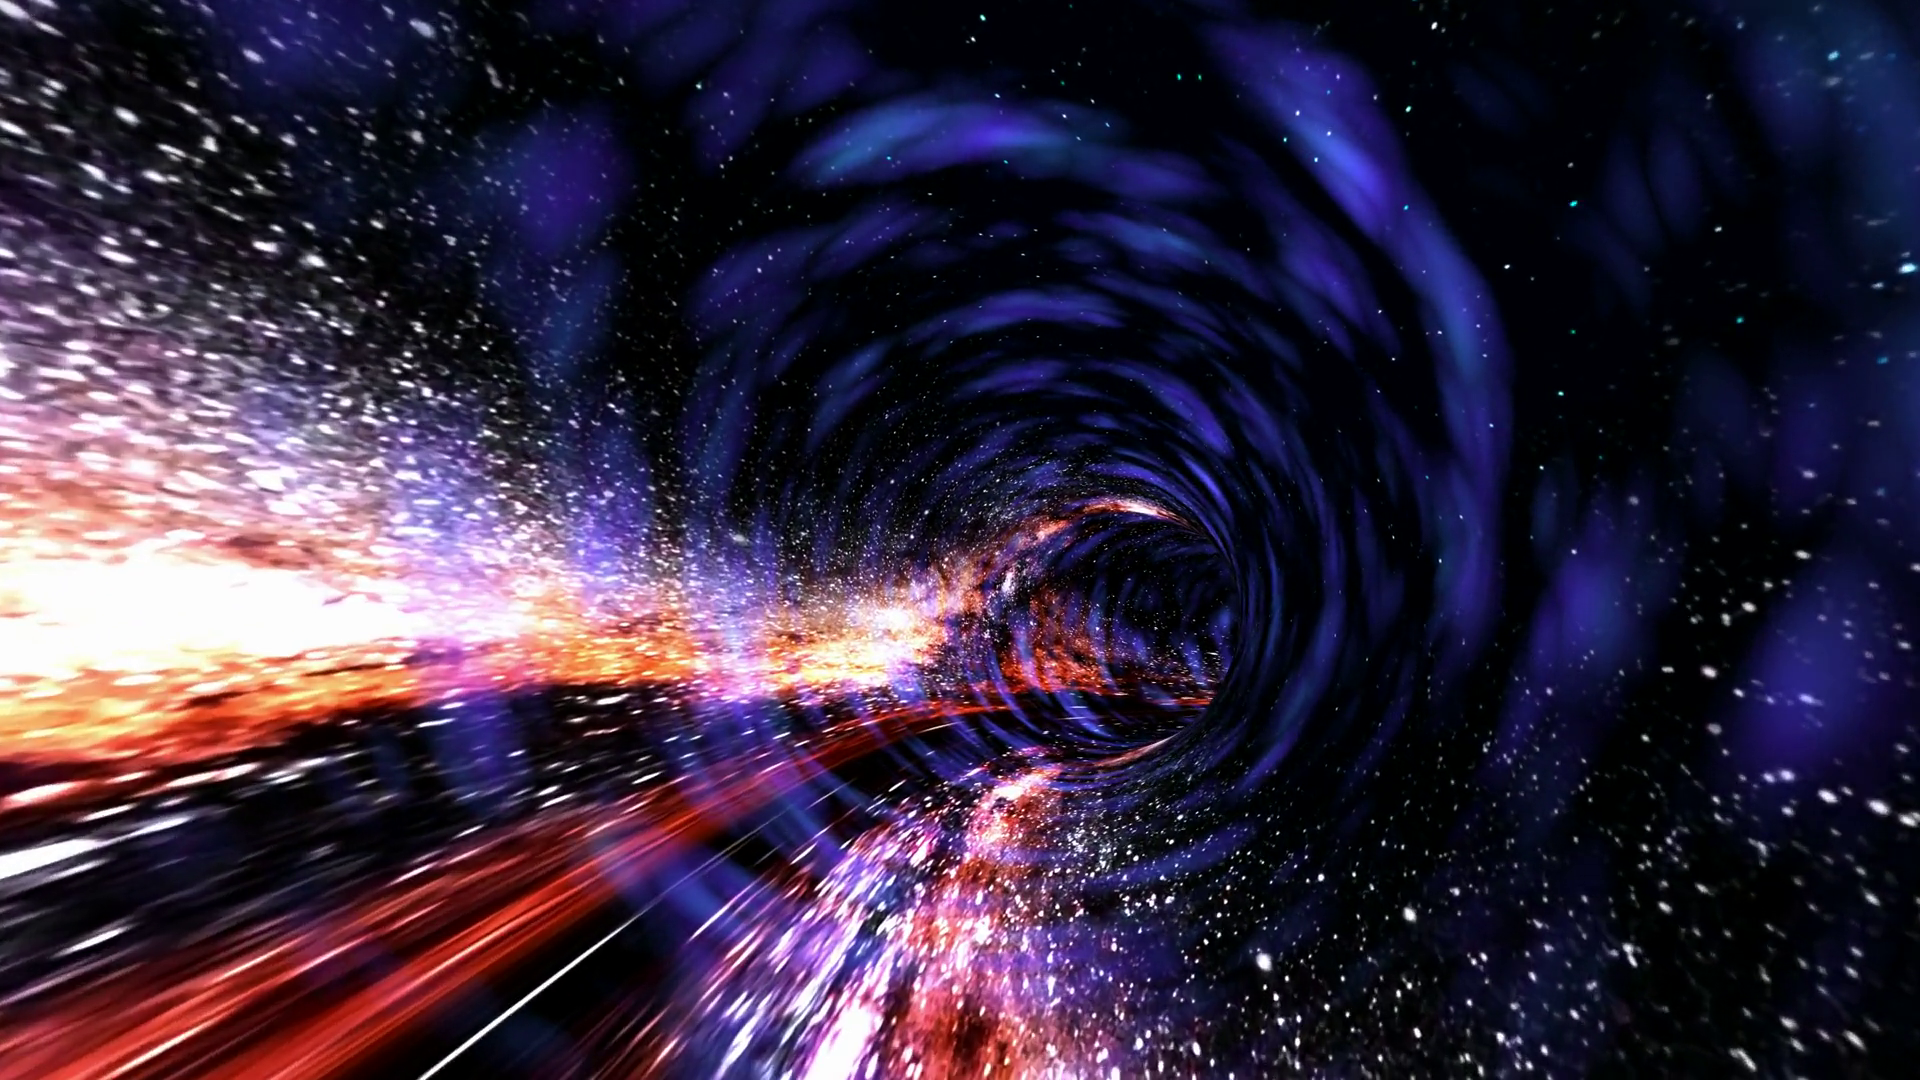 Loop animation with wormhole interstellar travel through a blue